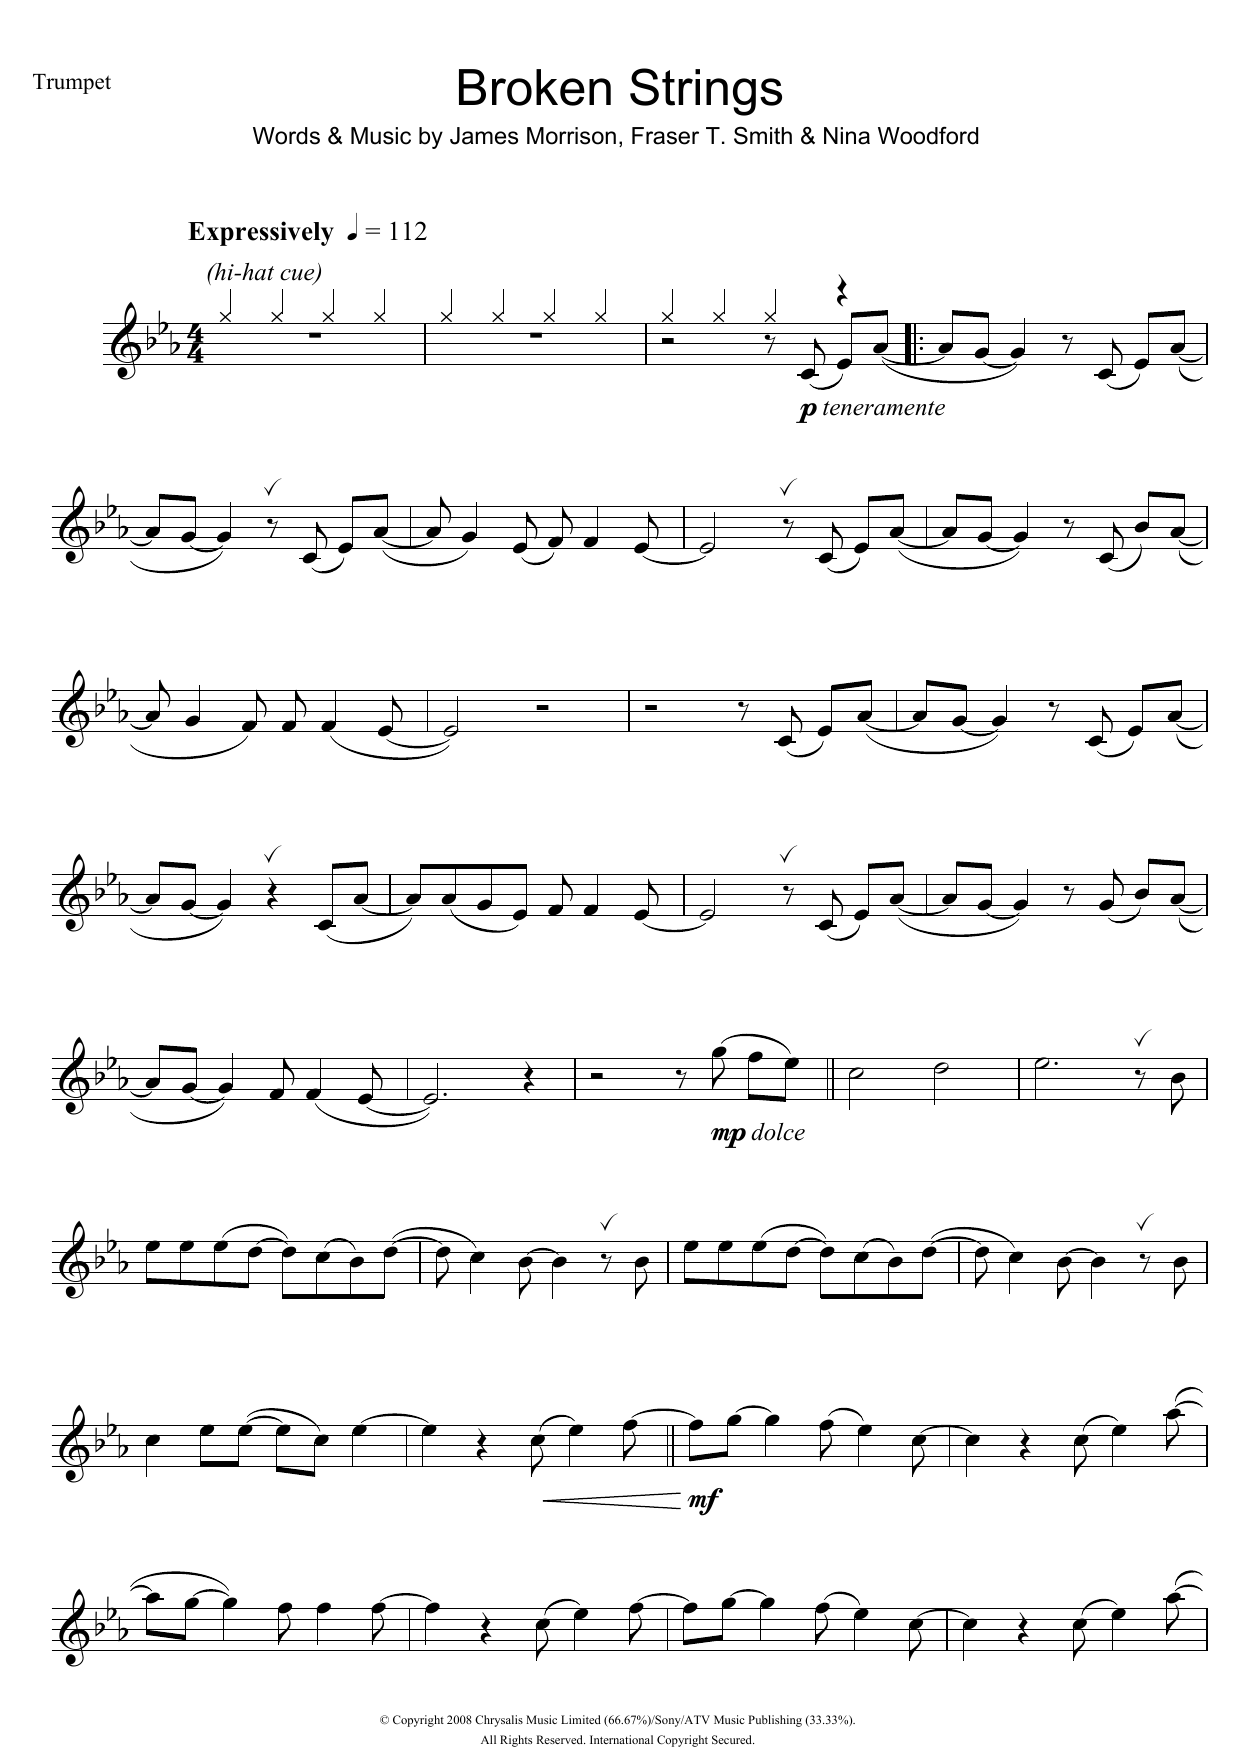 James Morrison Broken Strings Sheet Music Notes & Chords for Clarinet - Download or Print PDF